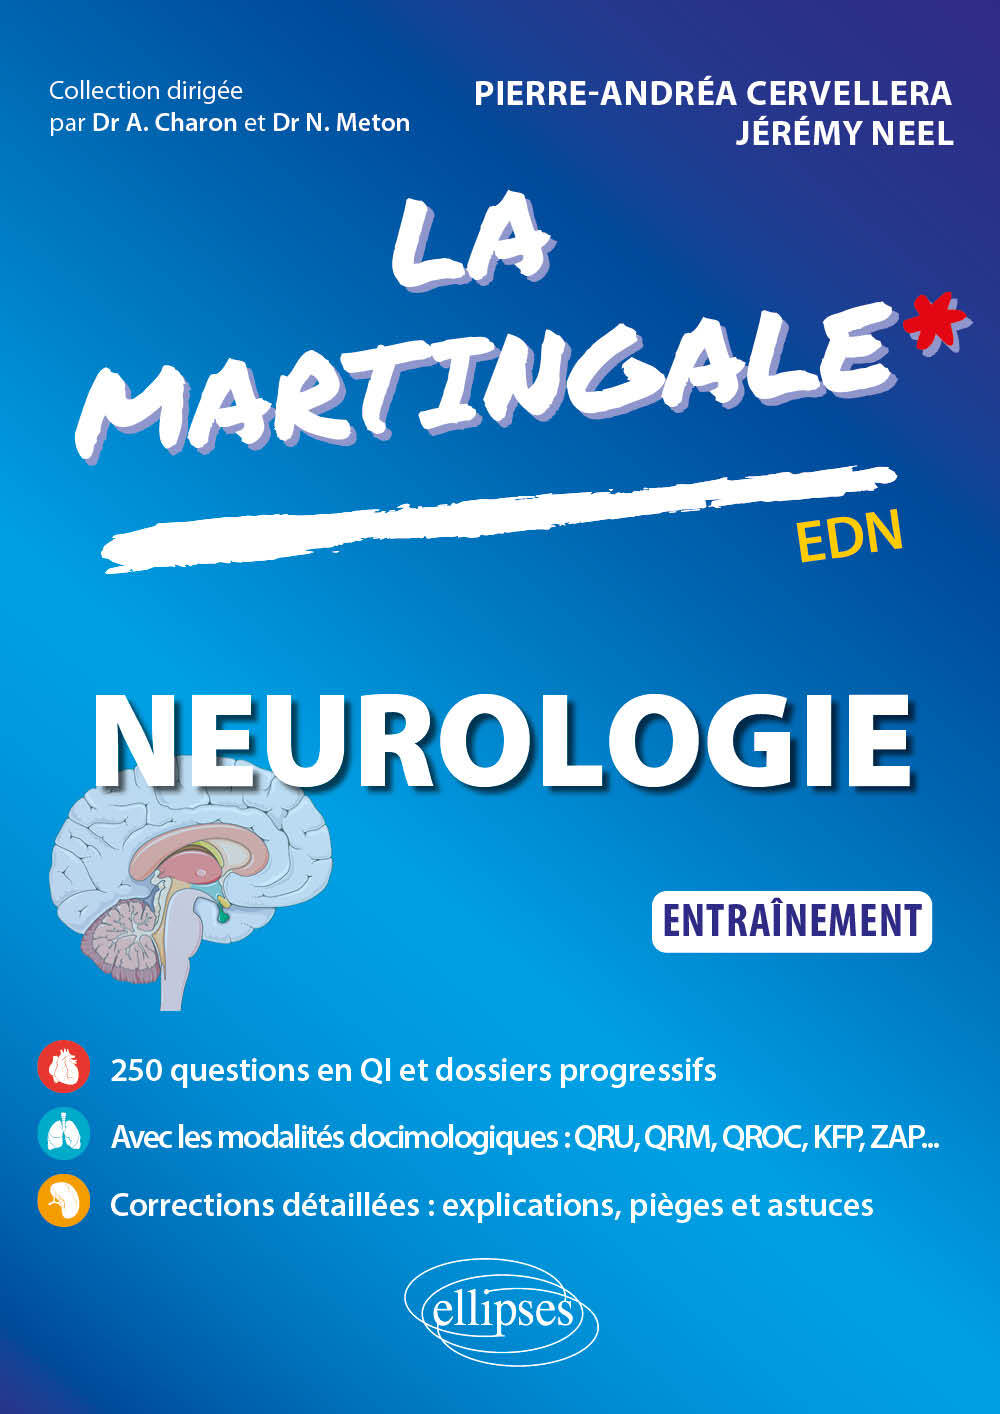 Kniha Neurologie Cervellera